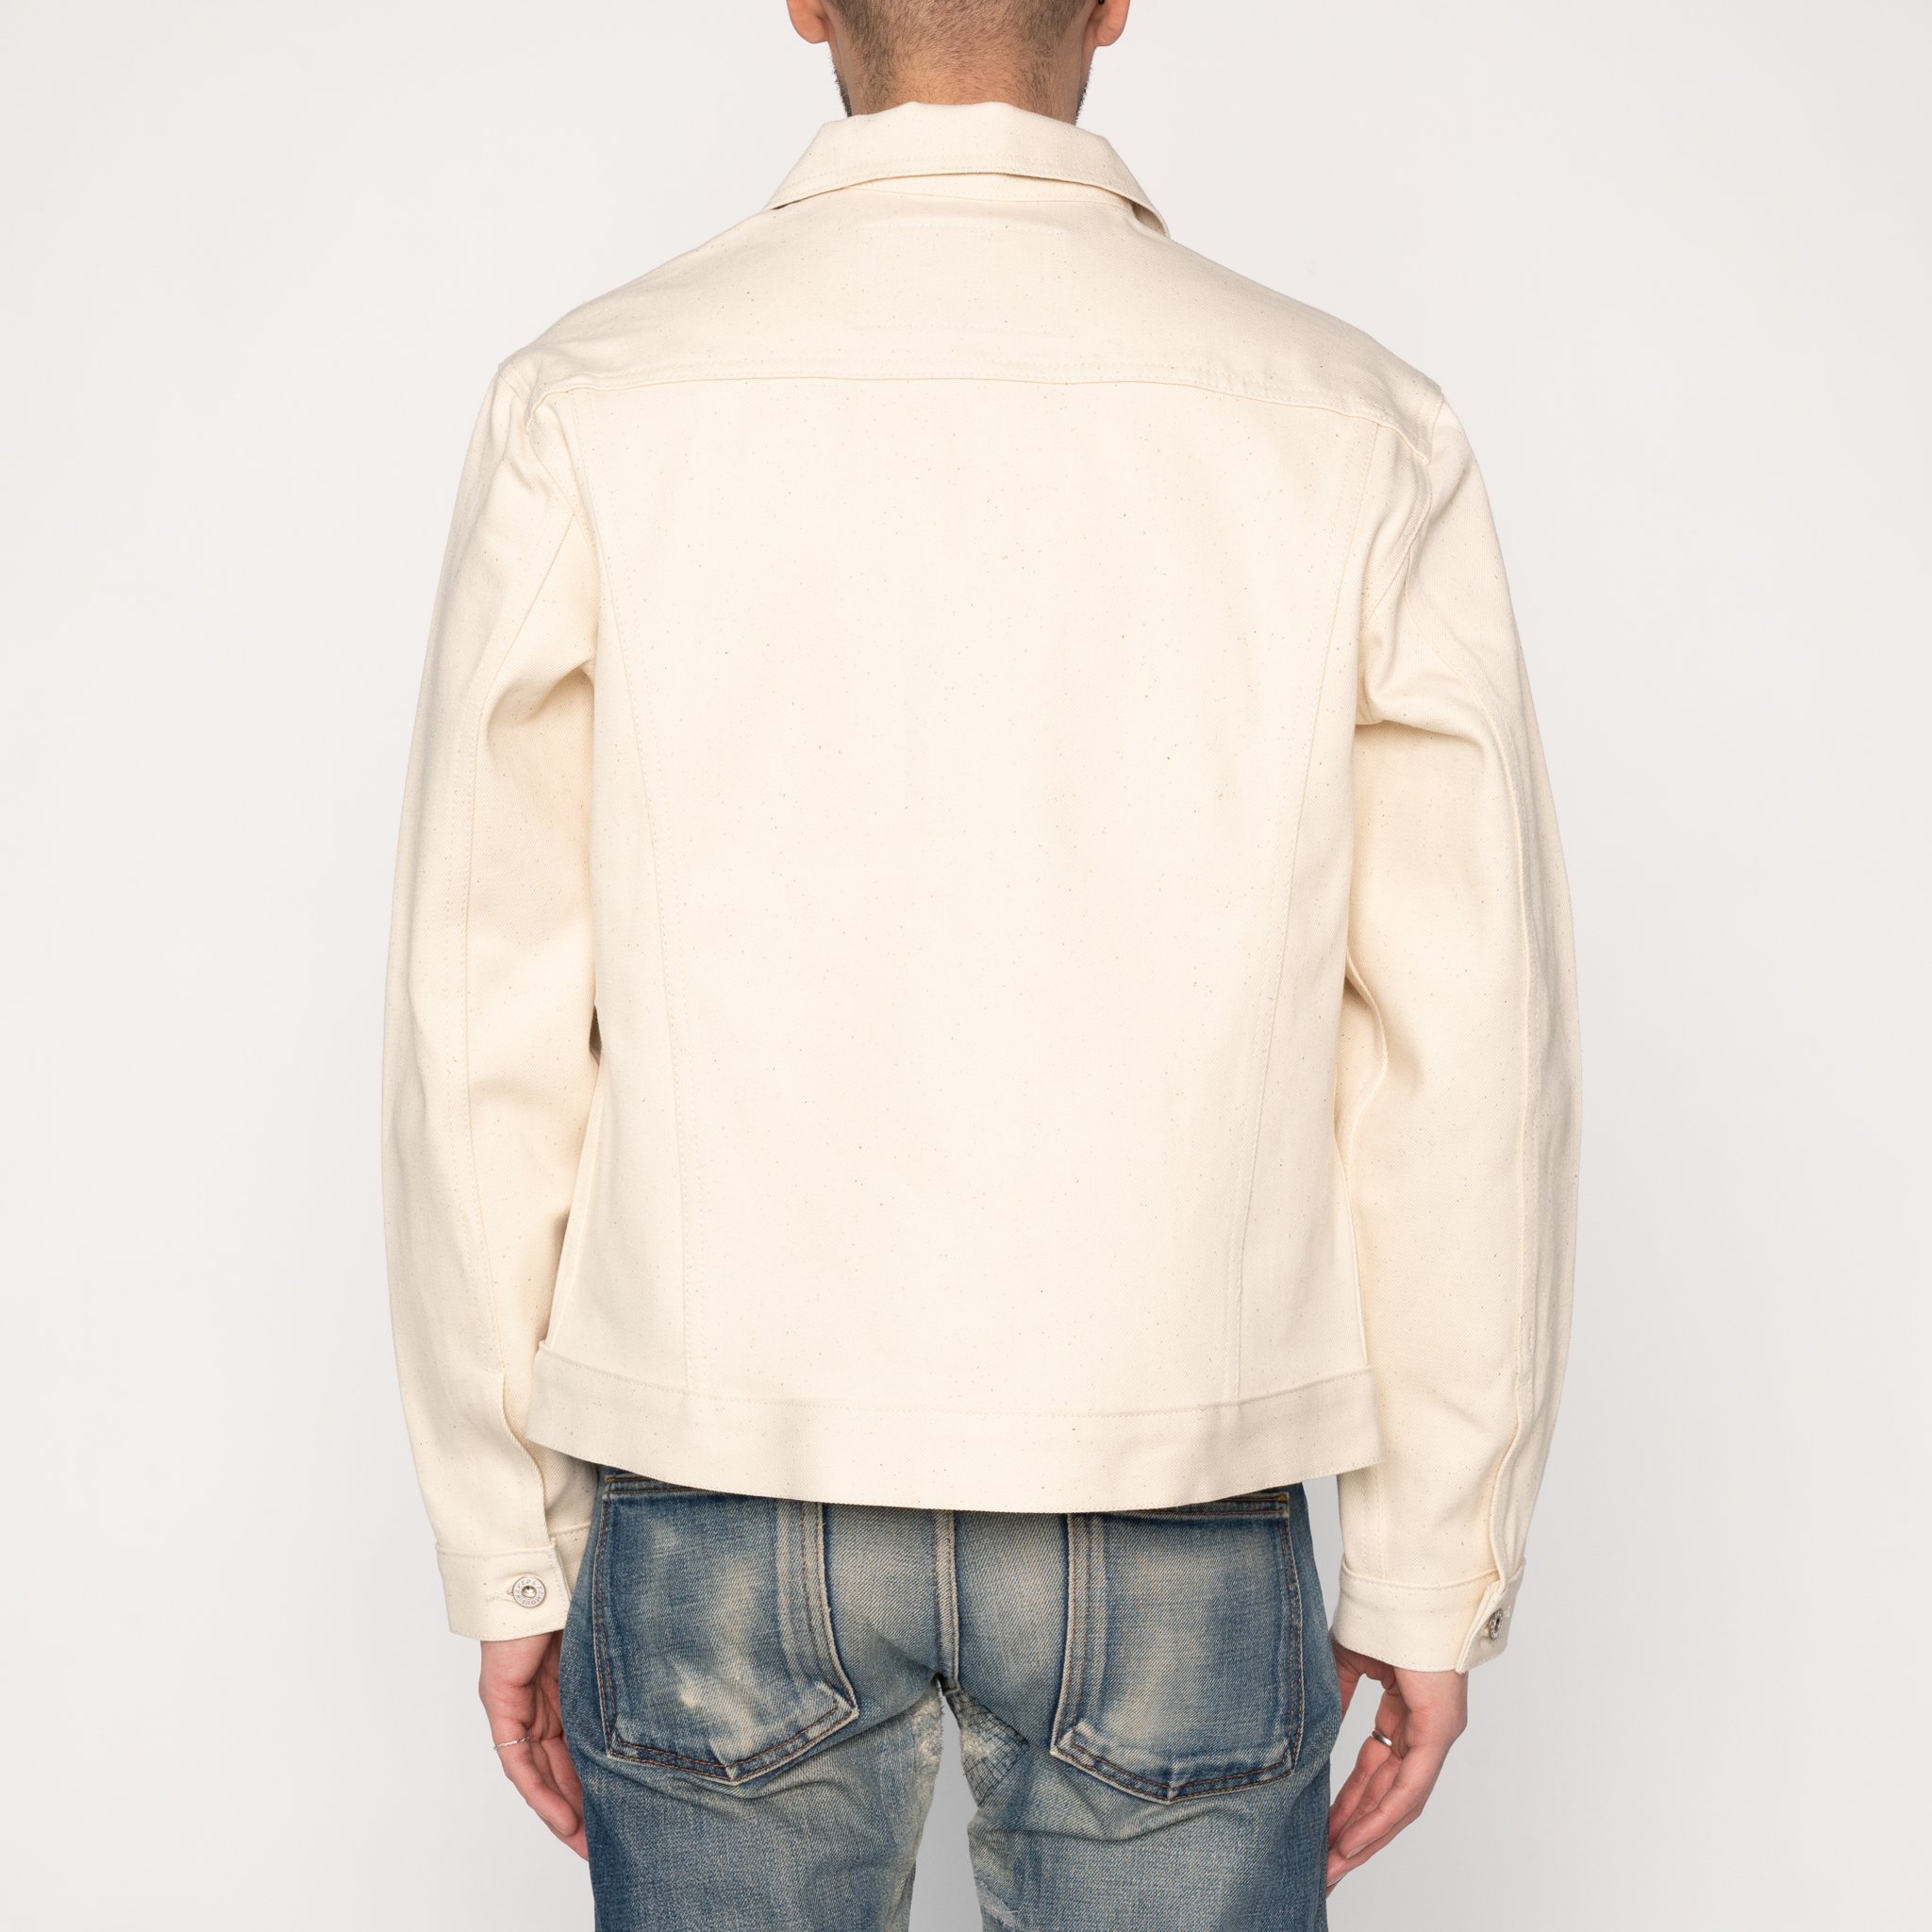  Denim Jacket - All Natural Organic Cotton Selvedge - back 